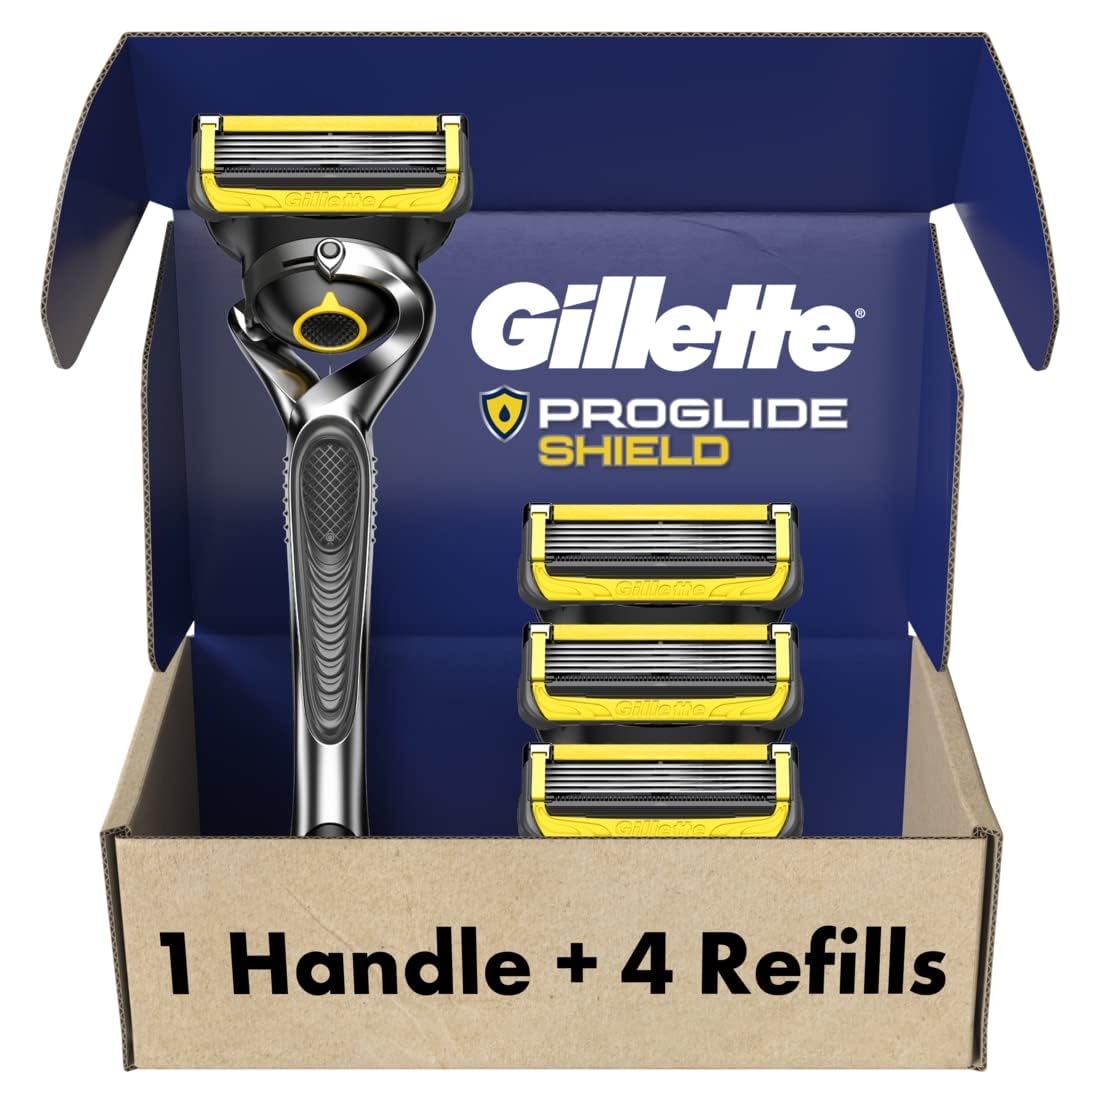 Gillette ProGlide Shield Razor for Men